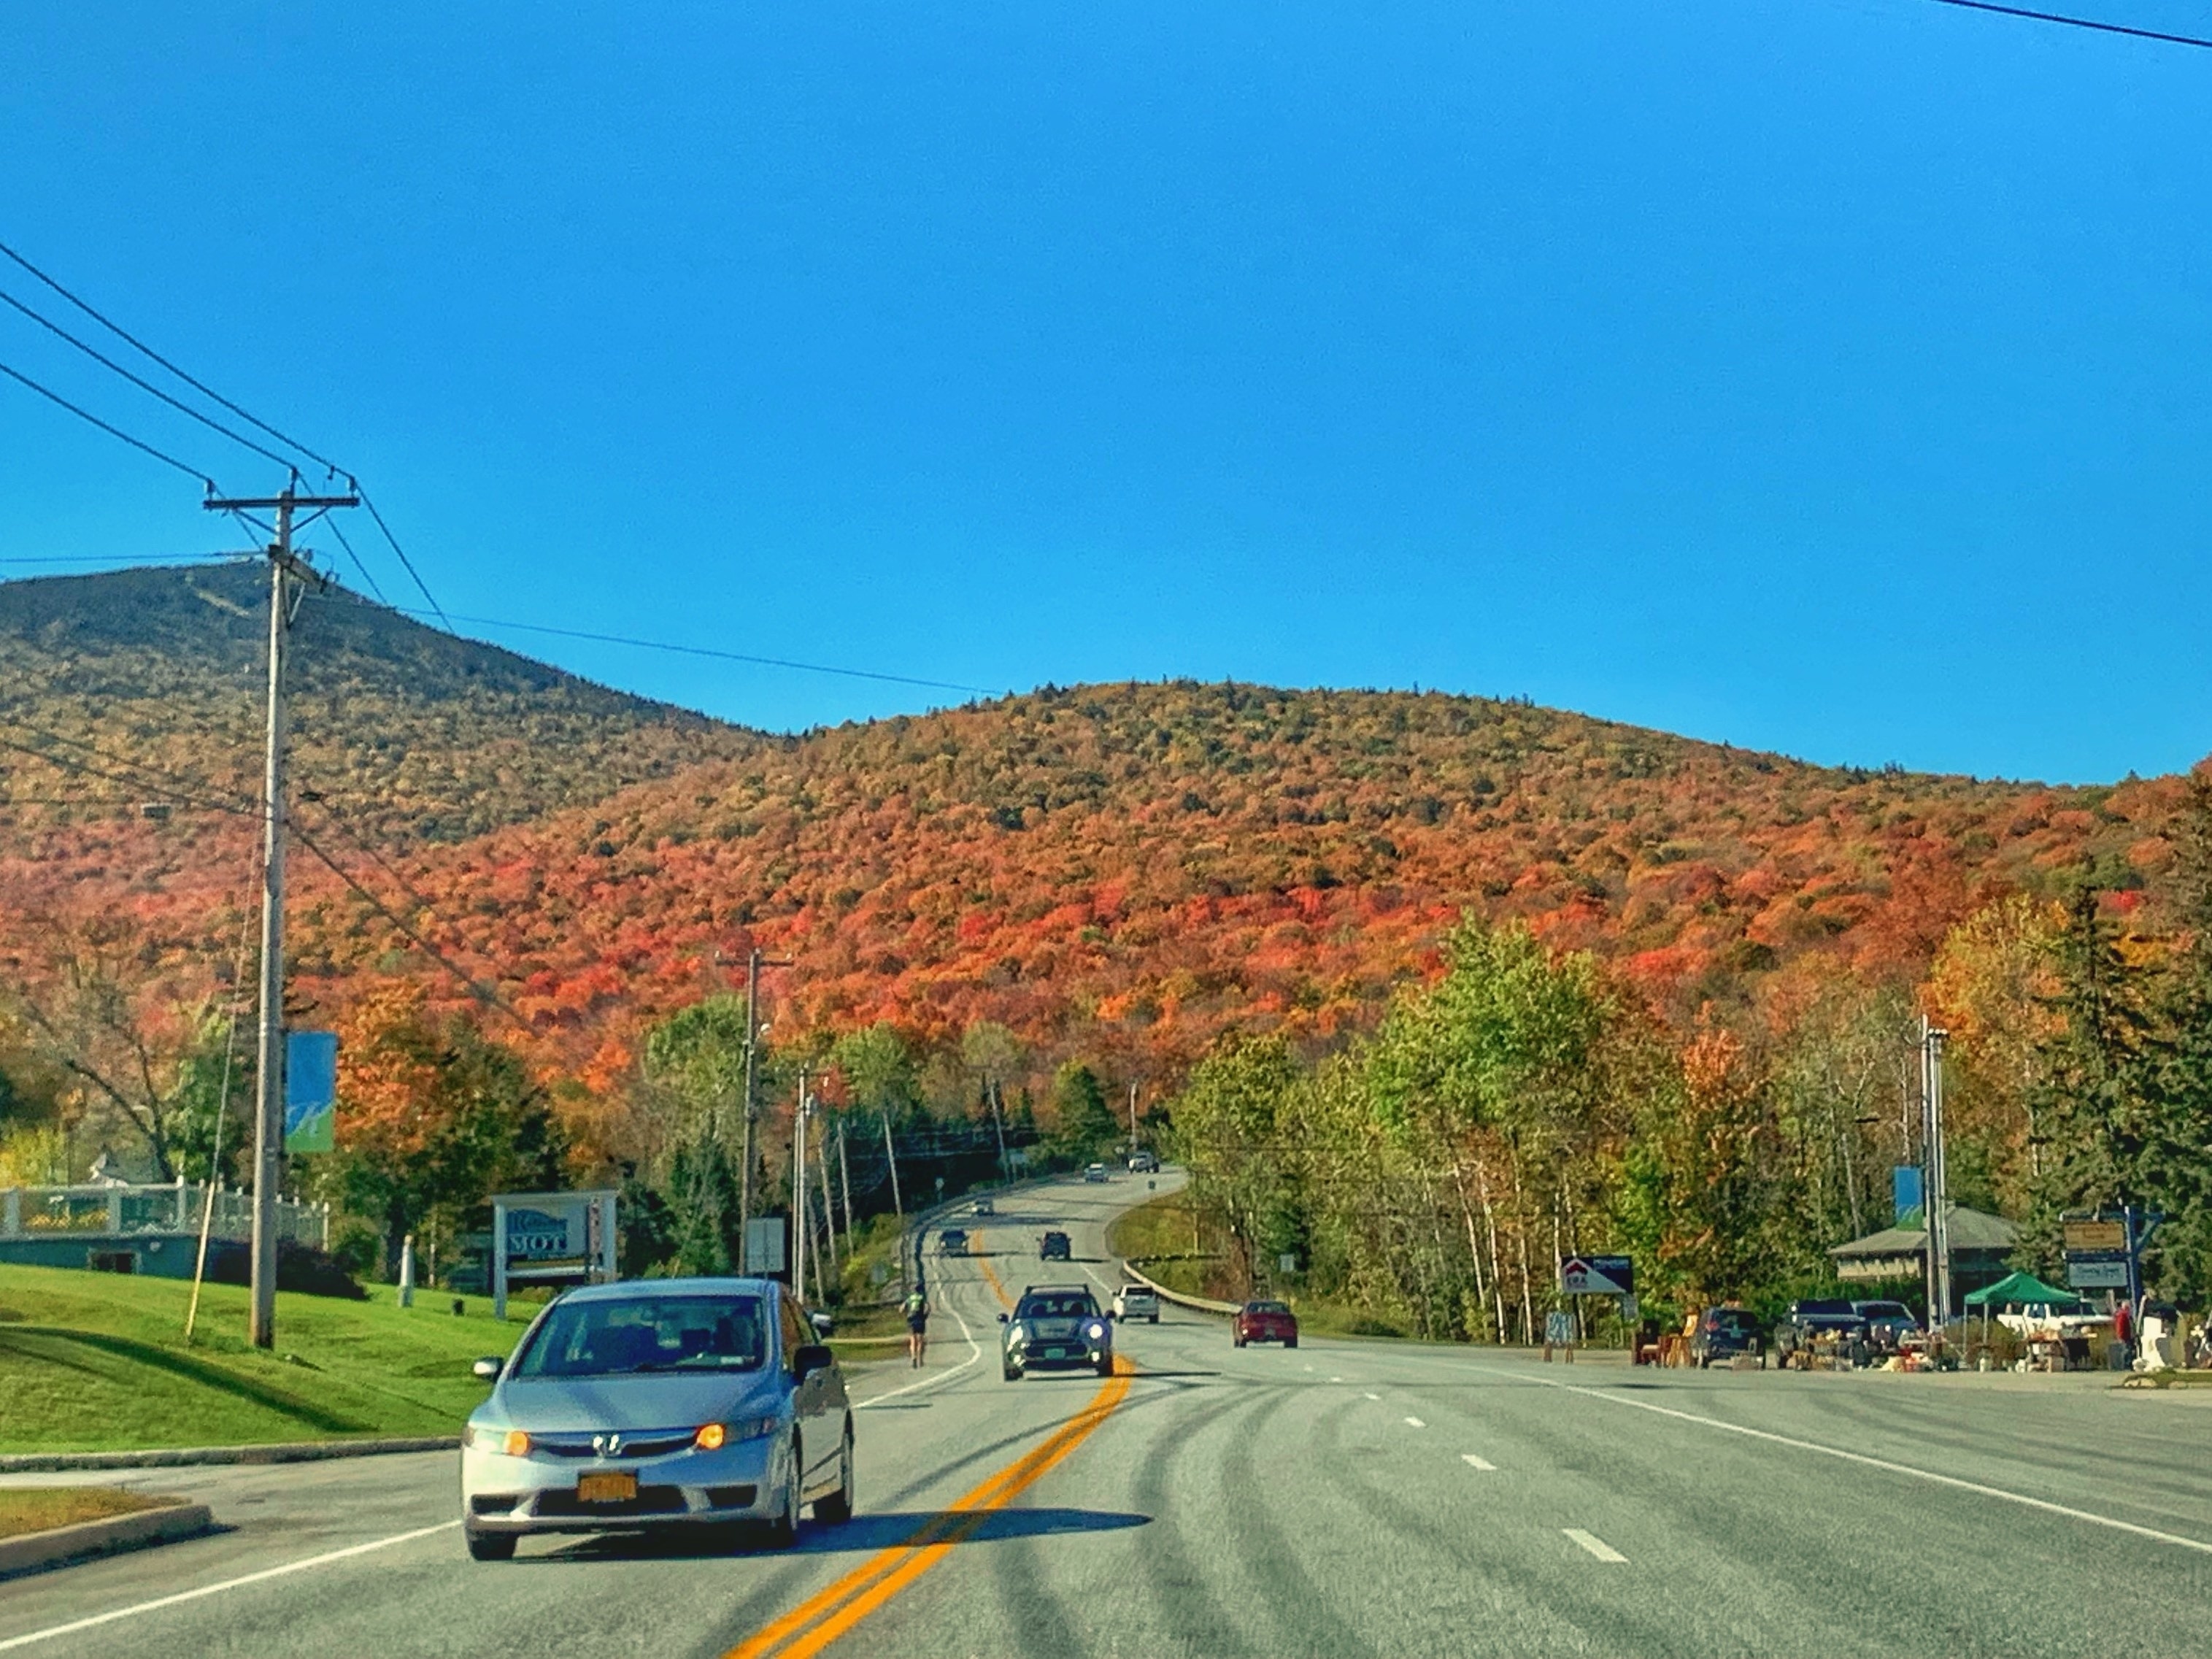 Killington, Vermont, United States of America